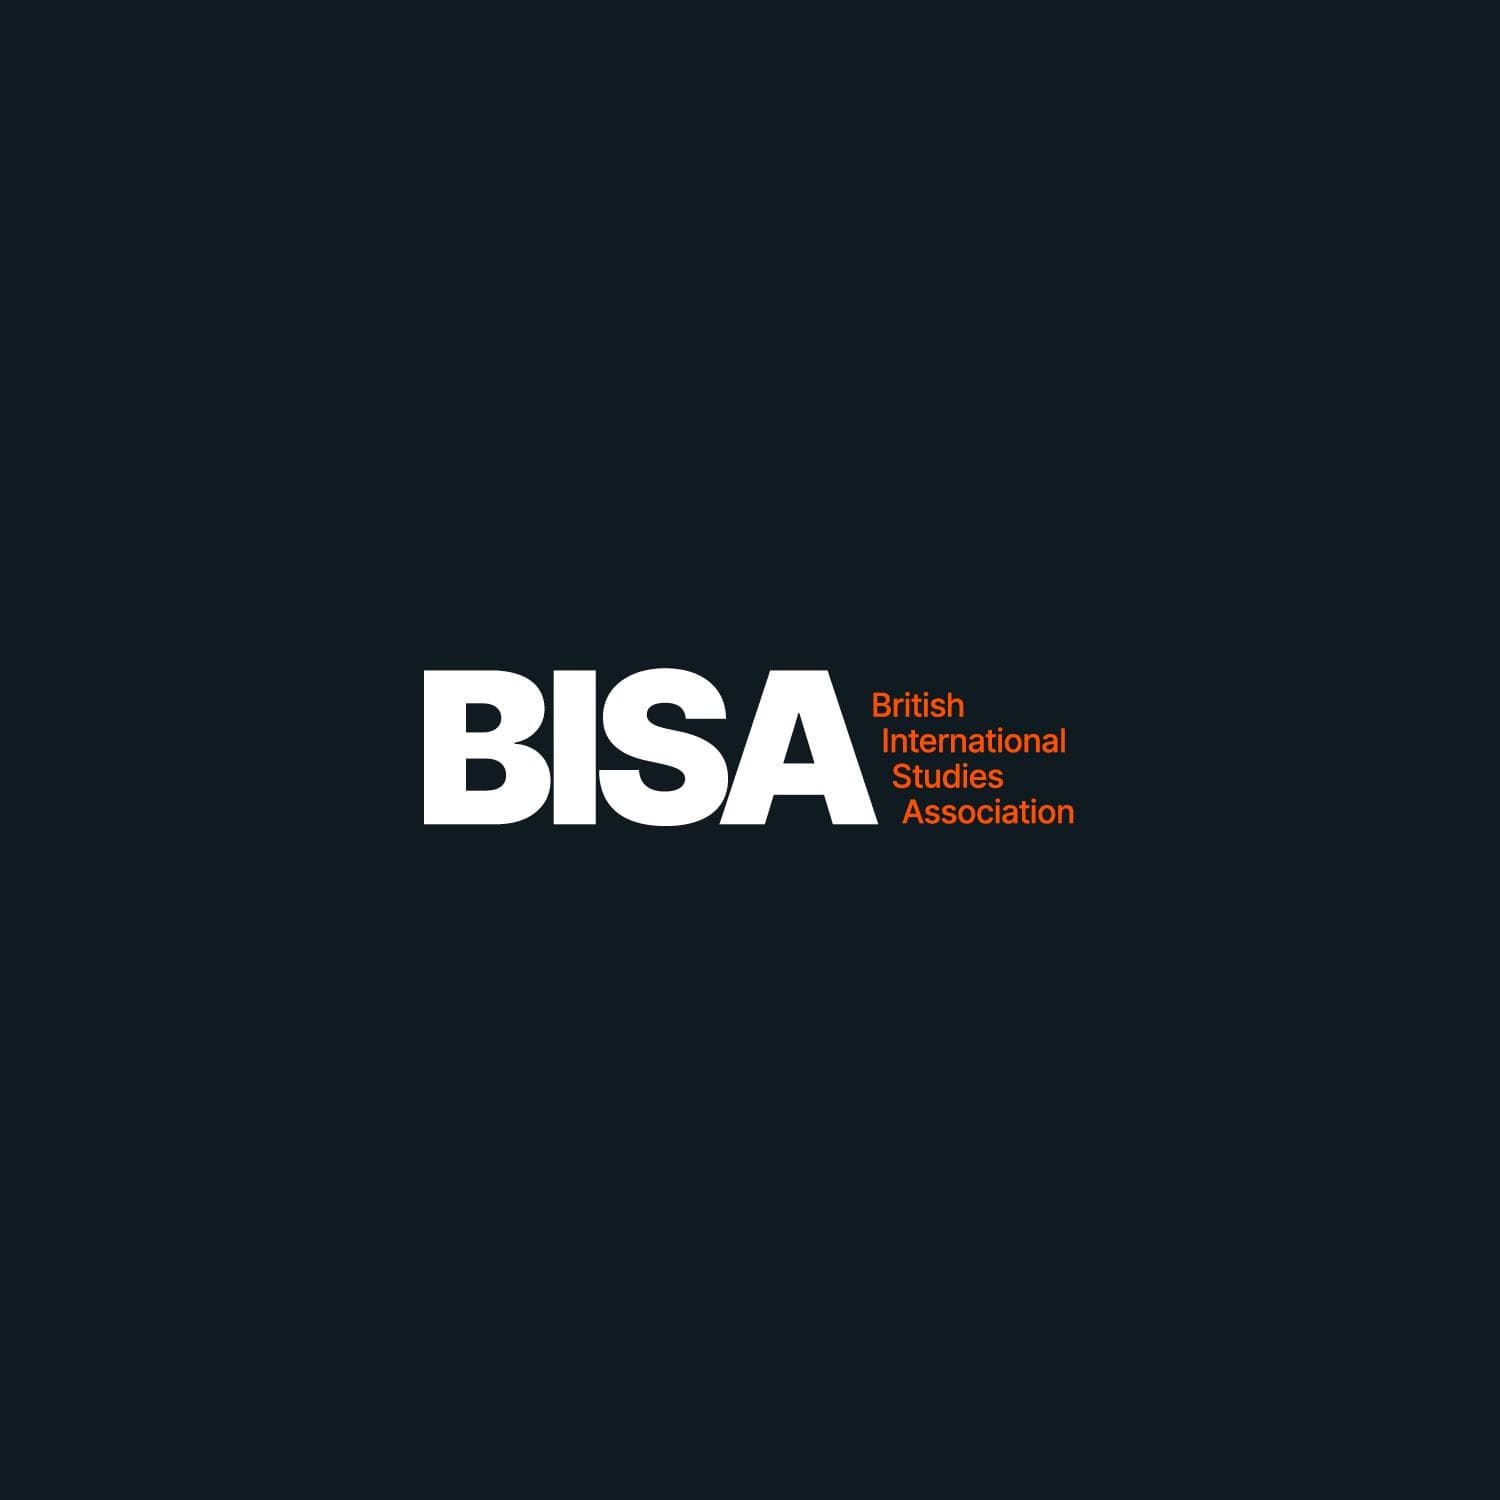 The new BISA logo